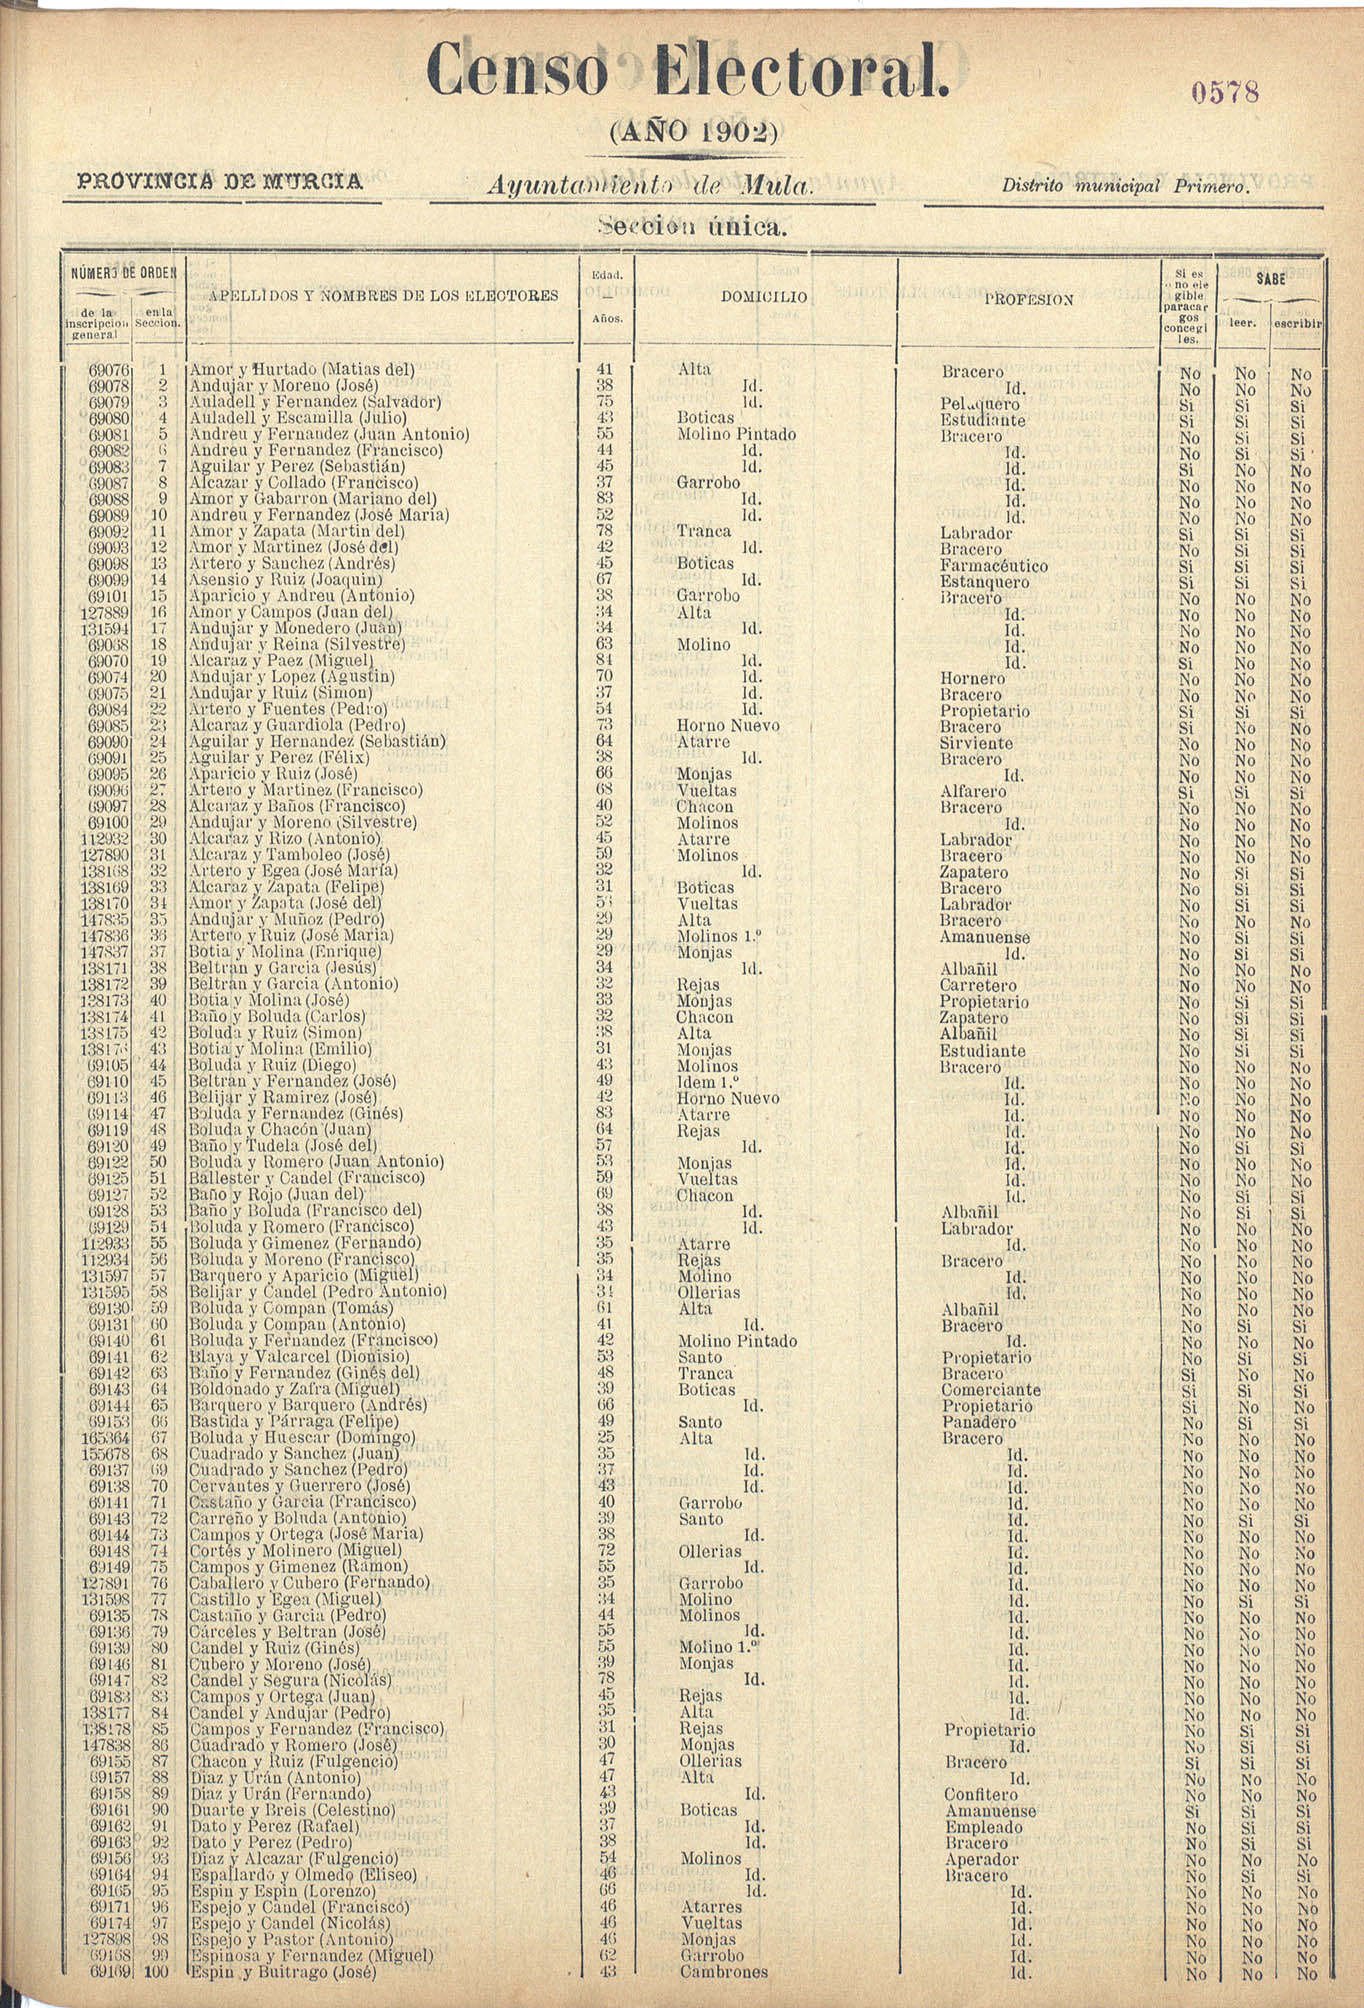 Censo electoral provincial de 1902: Mula.